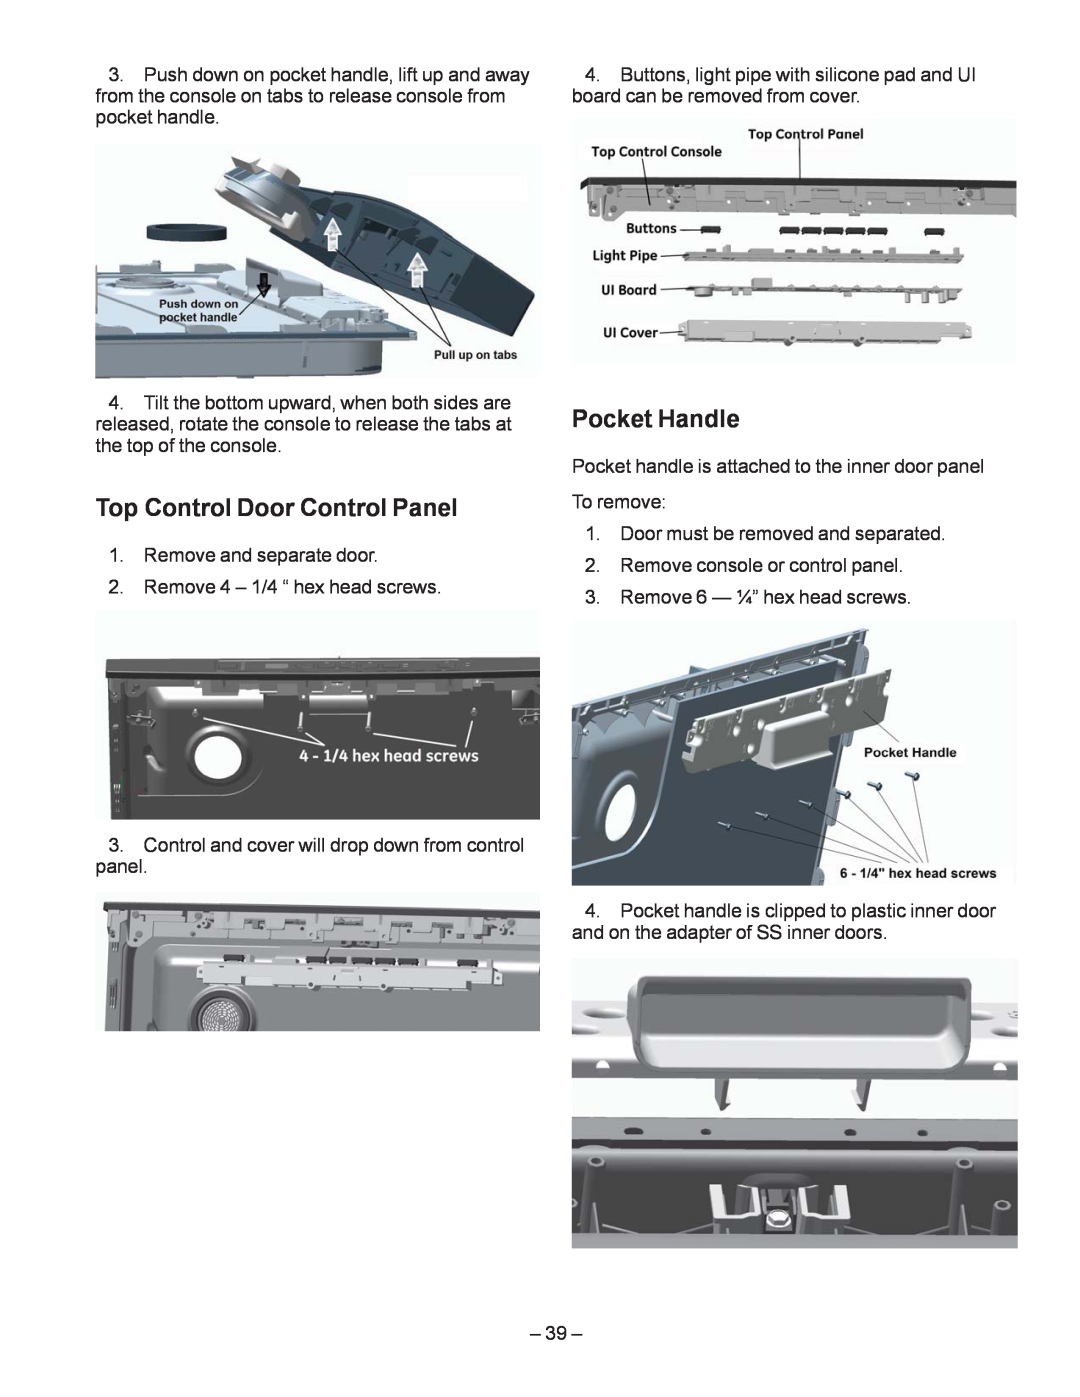 GE GDT550HGD Top Control Door Control Panel, Pocket Handle,  5HPRYH DQG VHSDUDWH GRRU, 5HPRYH  ó´ KH KHDG VFUHZV 